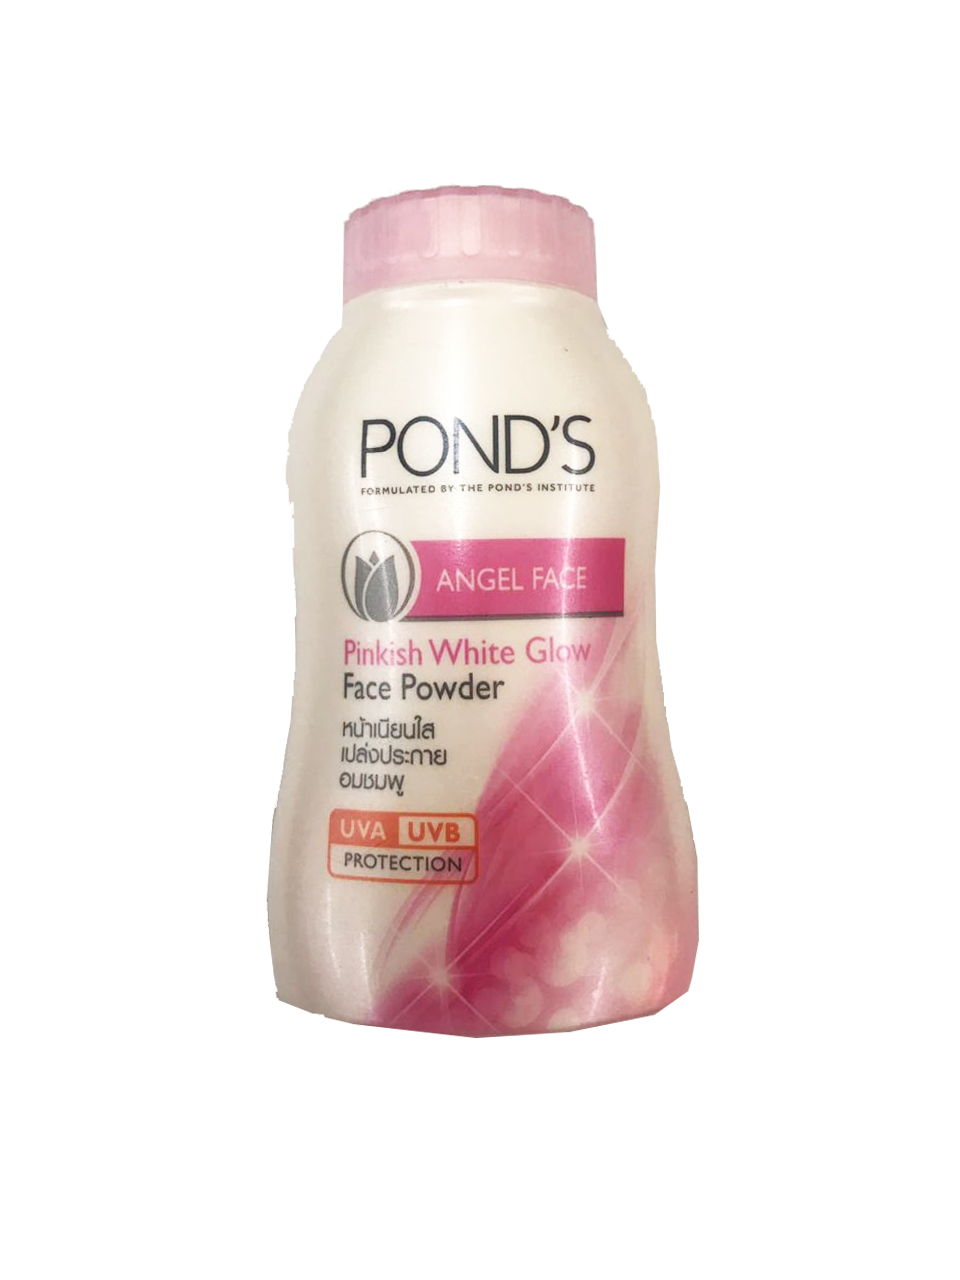 Ponds Pinkish White Glow Face Powder